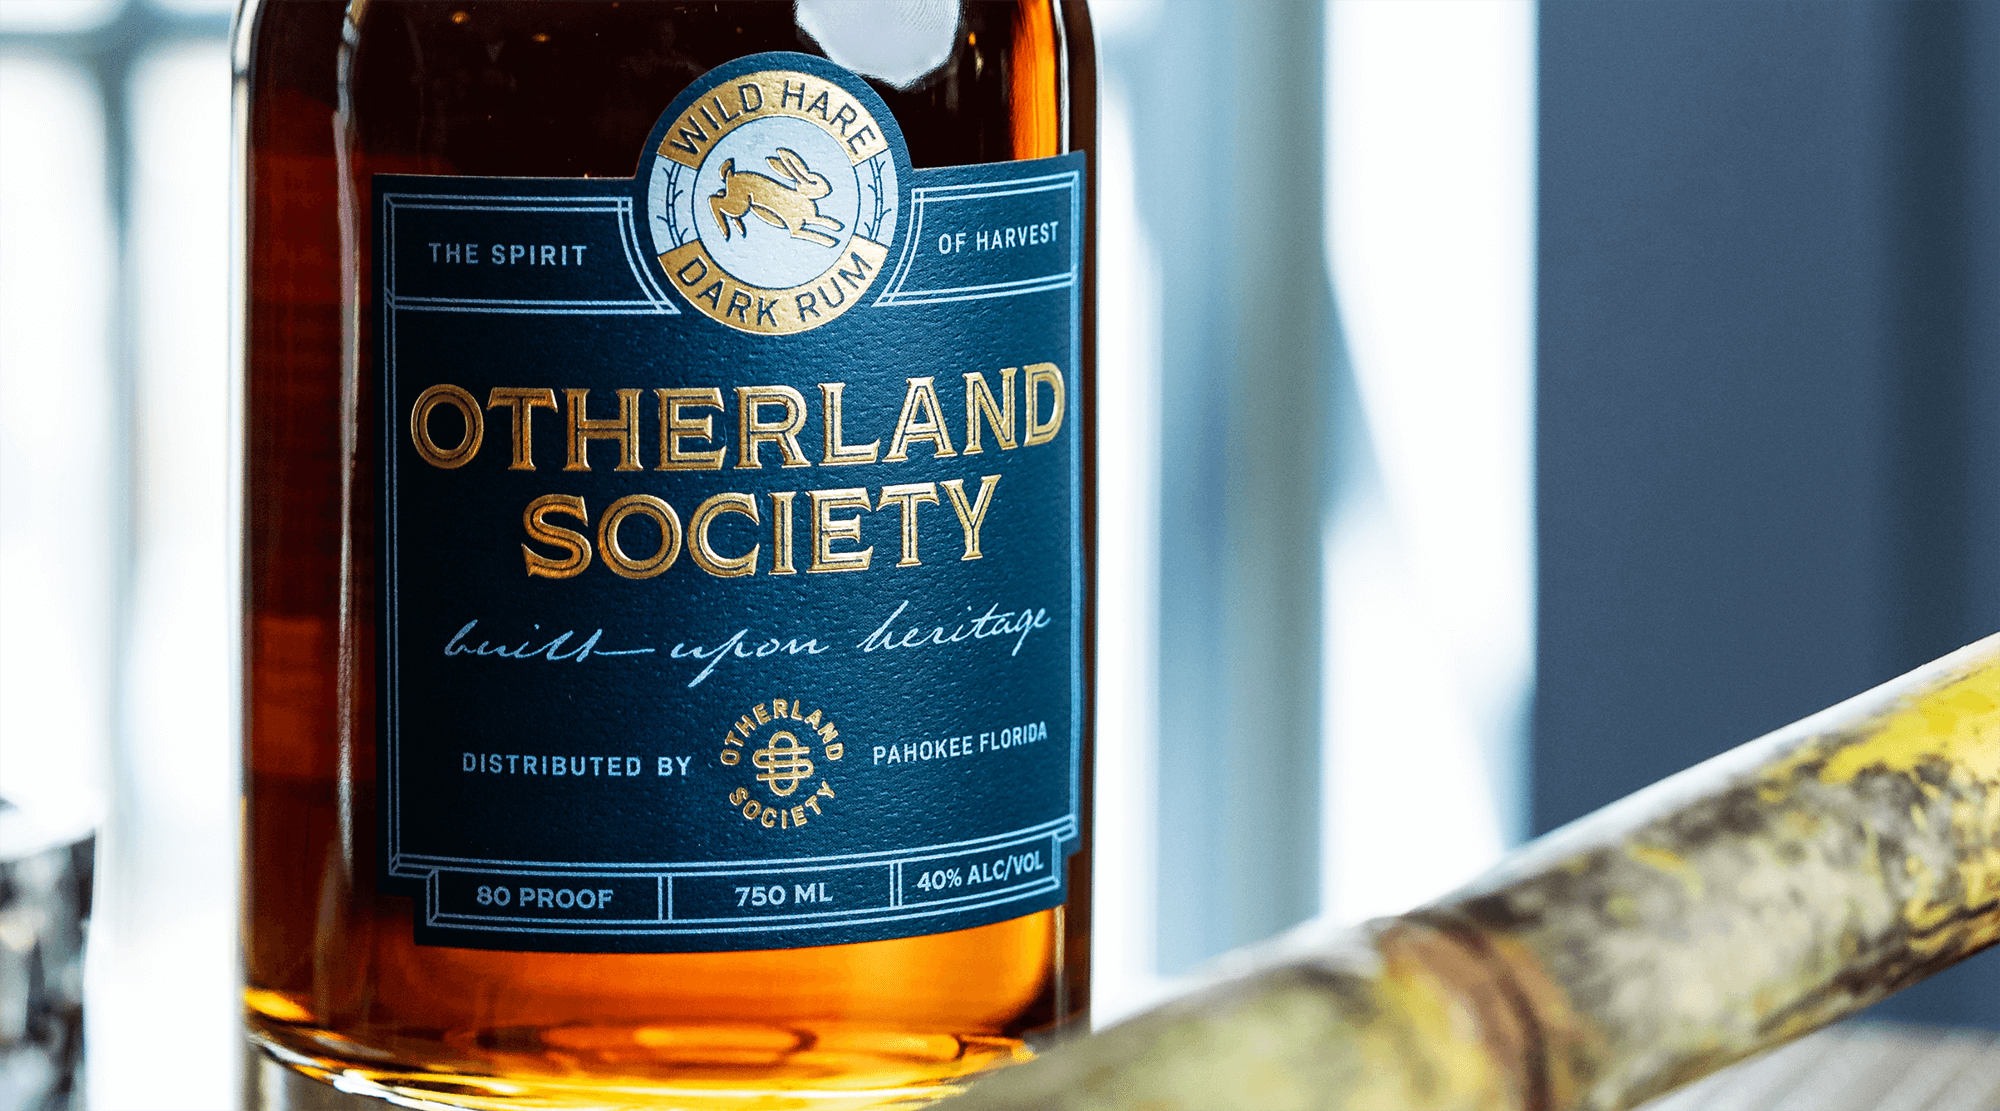 Close up image of Otherland Society Wild Hare Dark Rum label